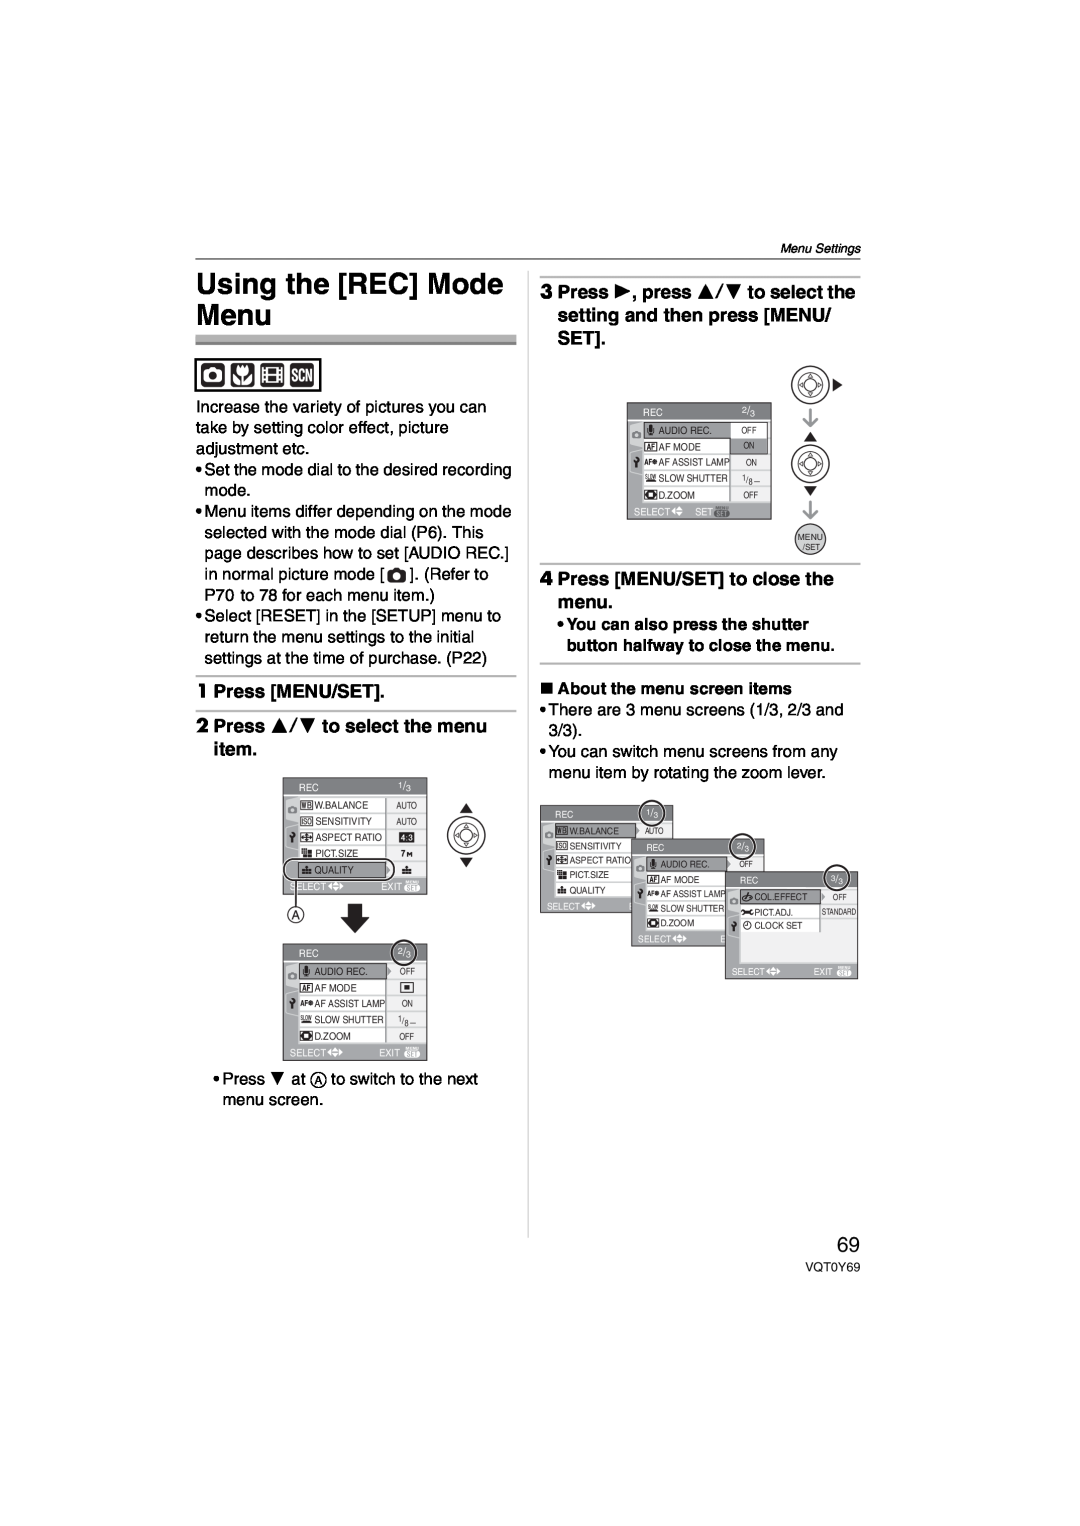 Panasonic DMC-FX3, DMC-FX07 Using the REC Mode Menu, Press MENU/SET 2 Press 3/4 to select the menu item 